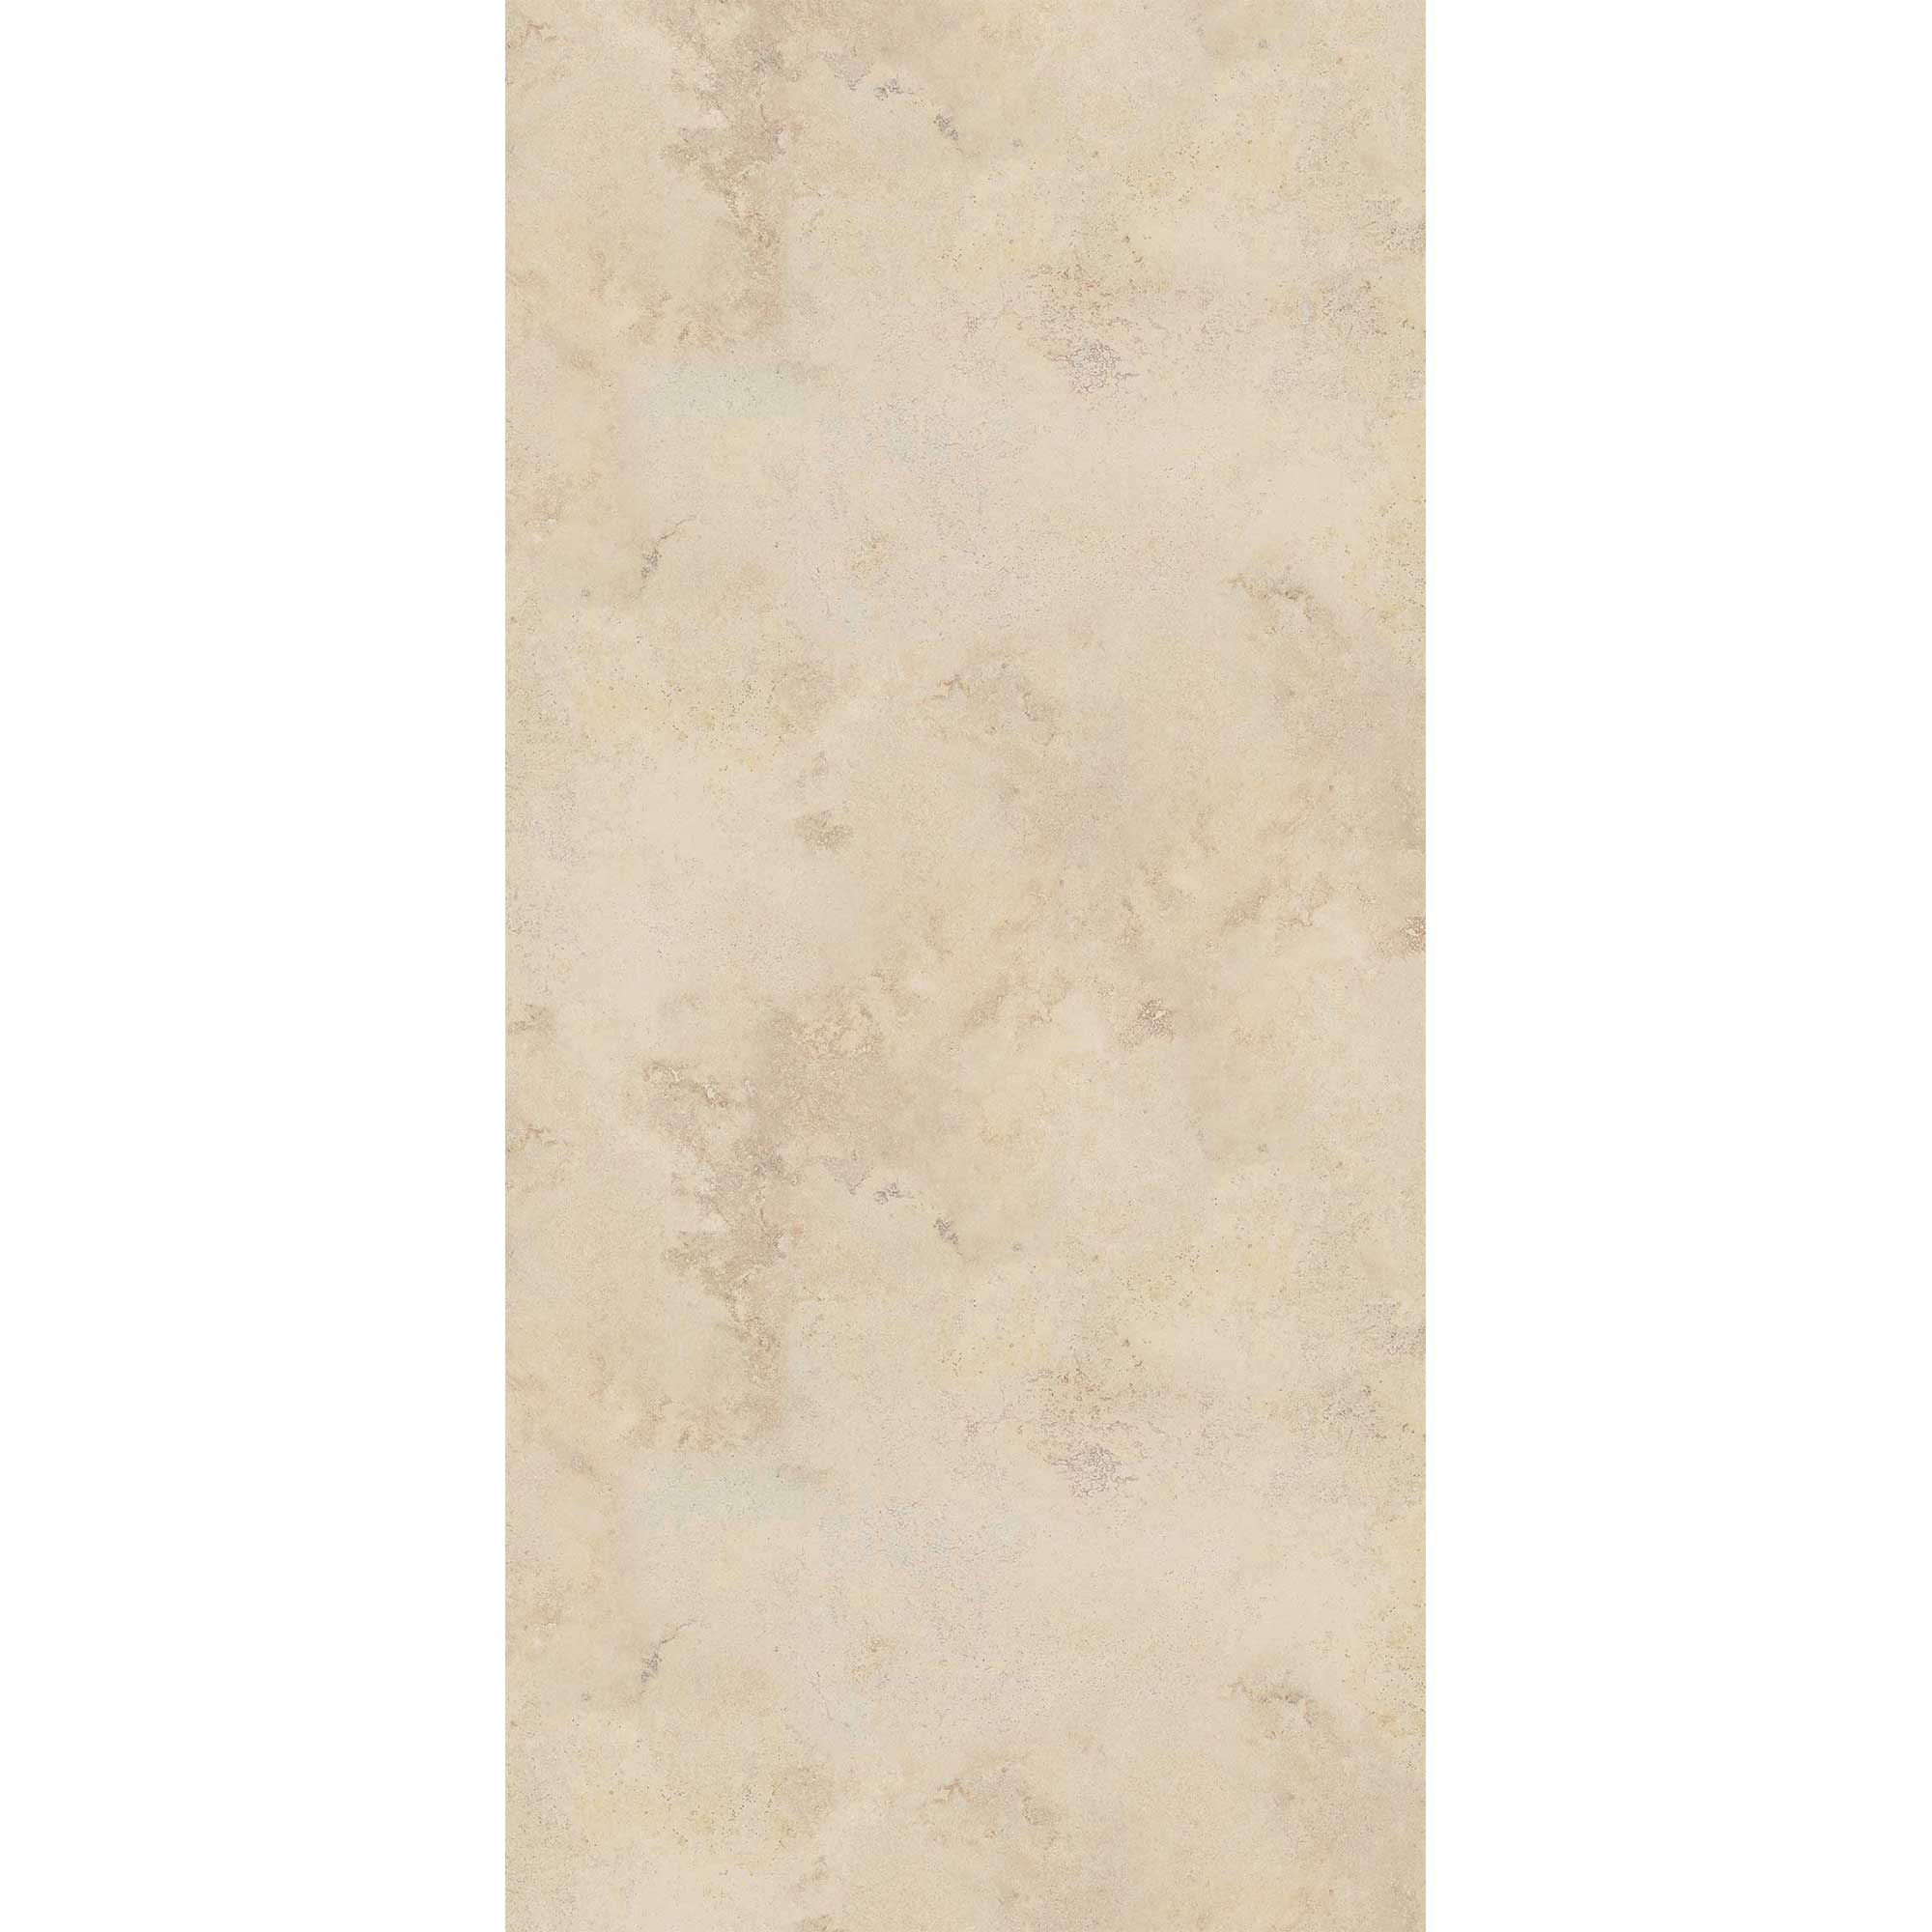 Duschrückwand Marmoroptik sandfarben 100 x 255 cm + product picture